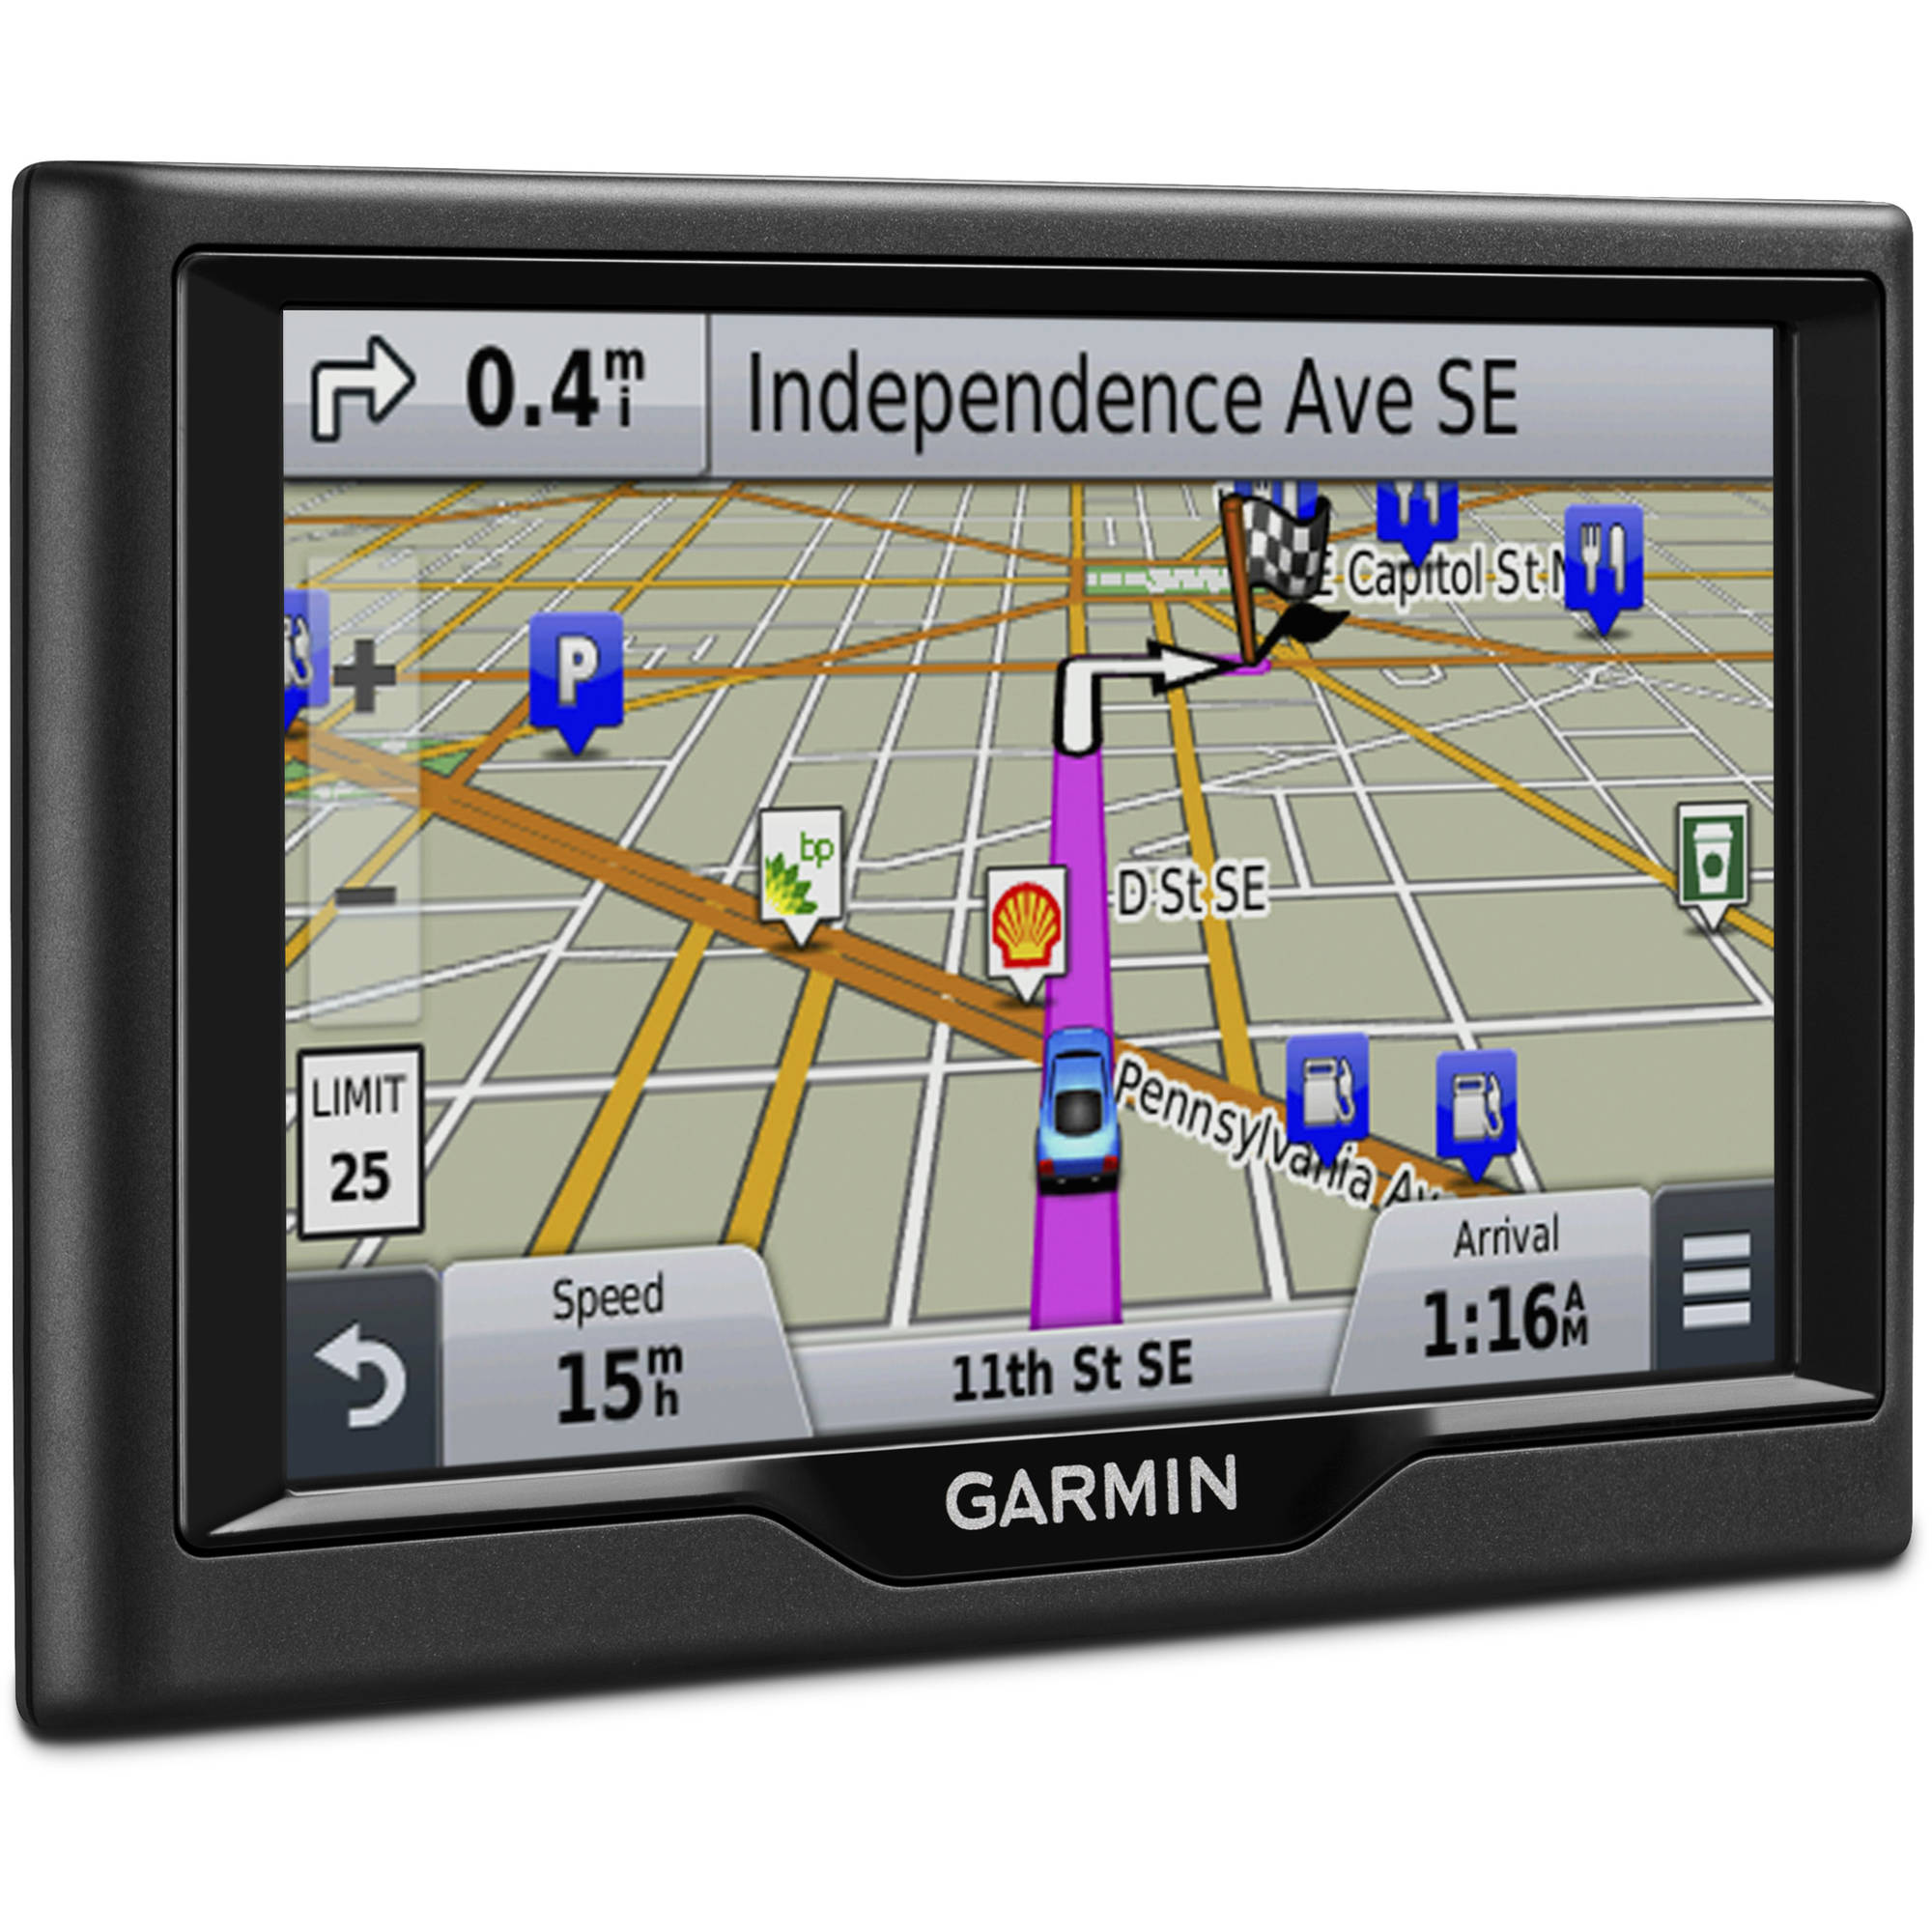 Mappe Unlocked Garmin Nuvi 1200 Troubleshooting Air